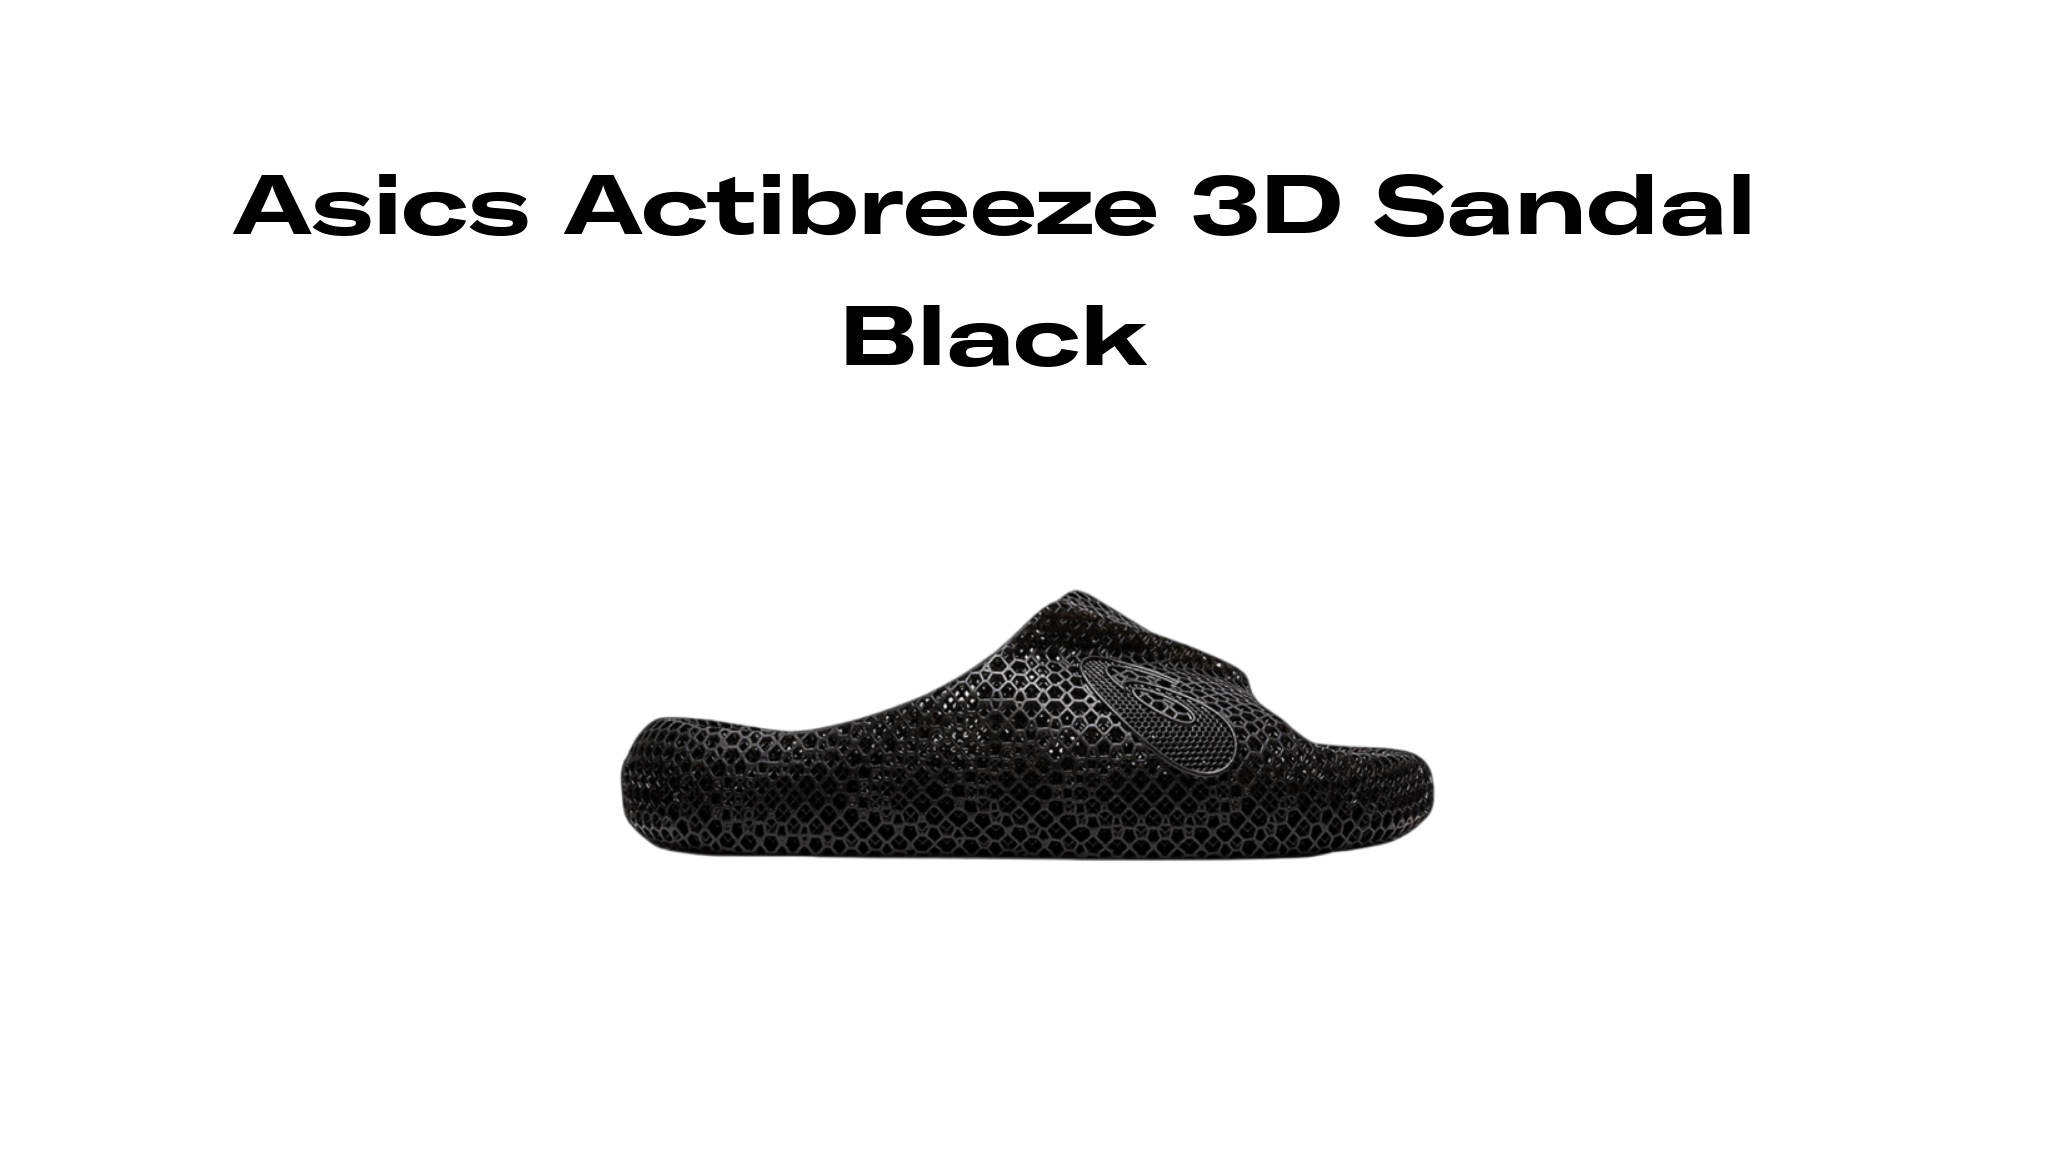 Asics Actibreeze 3D Sandal Black, Raffles and Release Date | Sole Retriever